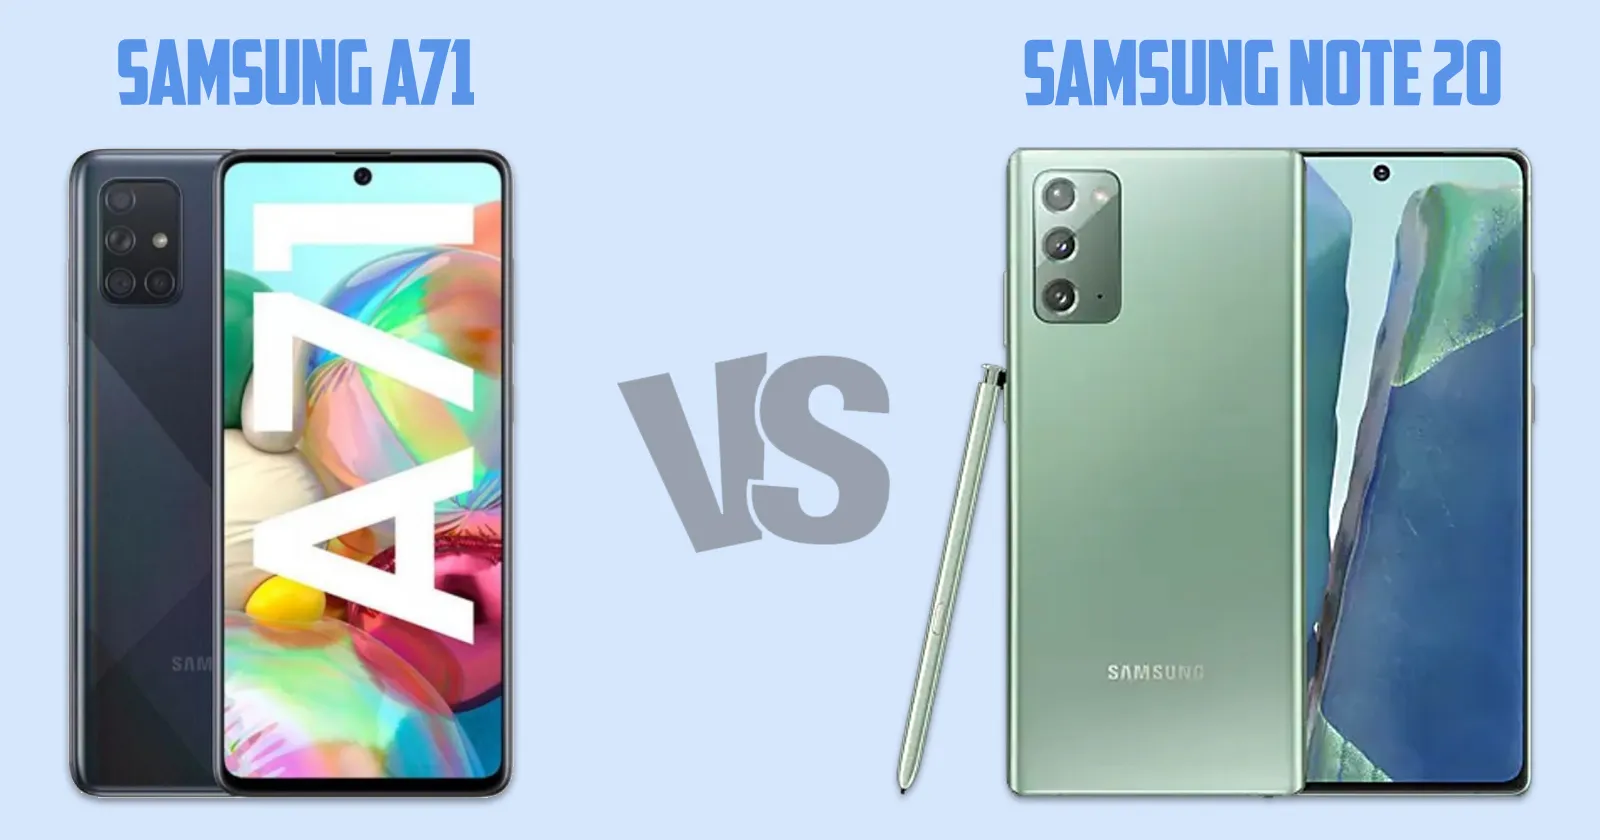 Samsung Galaxy A71 vs Samsung Galaxy Note 20[ Full Comparison ]